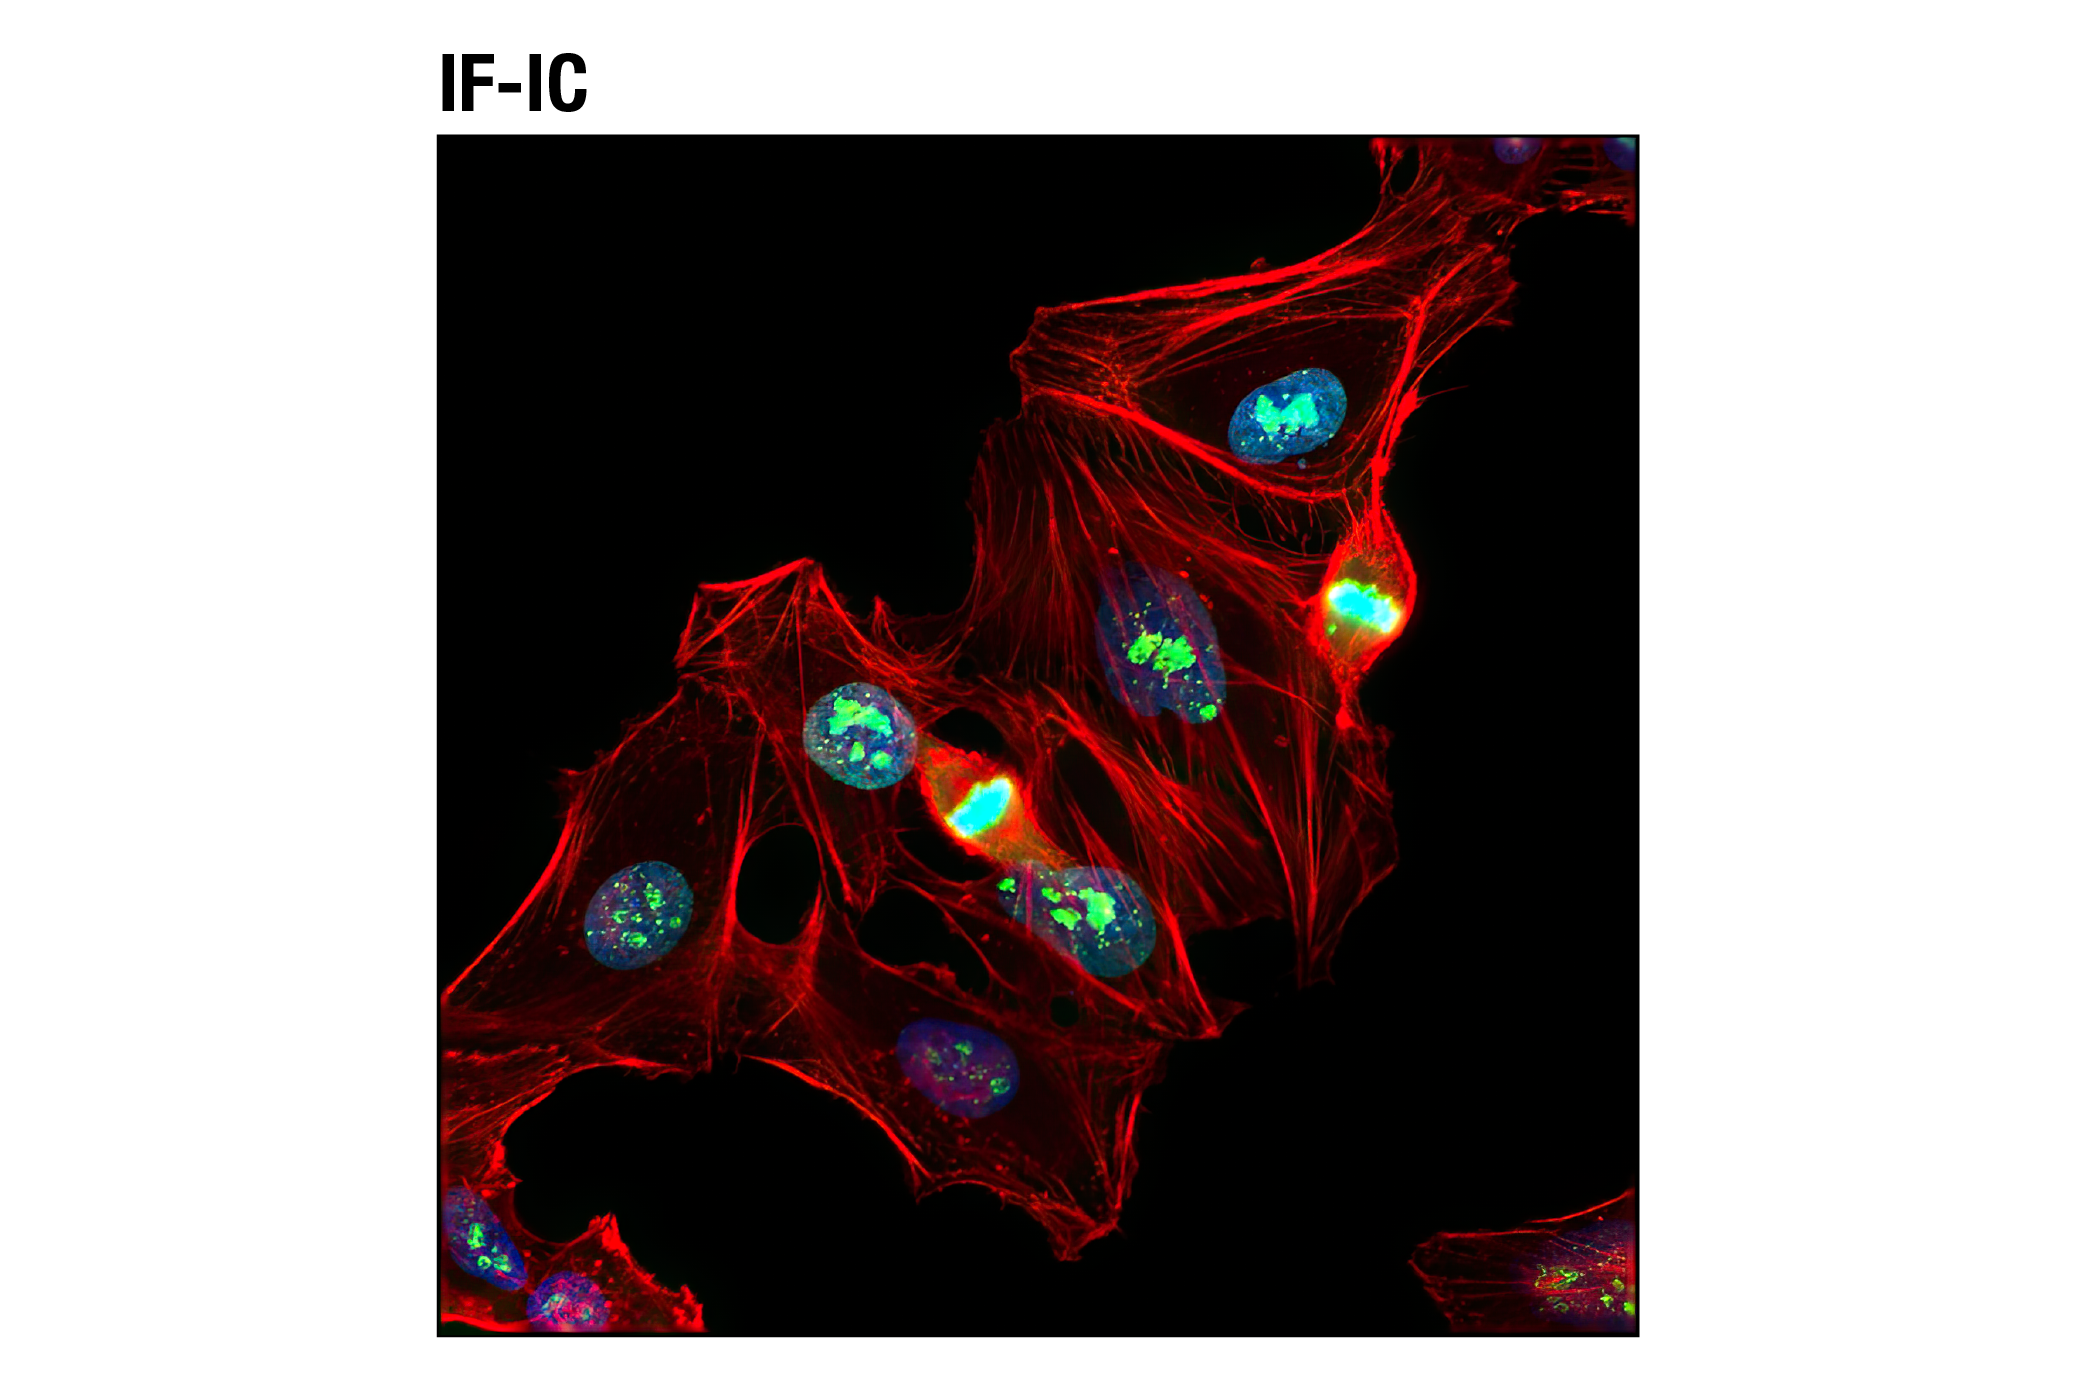  Image 26: Microglia Cross Module Antibody Sampler Kit